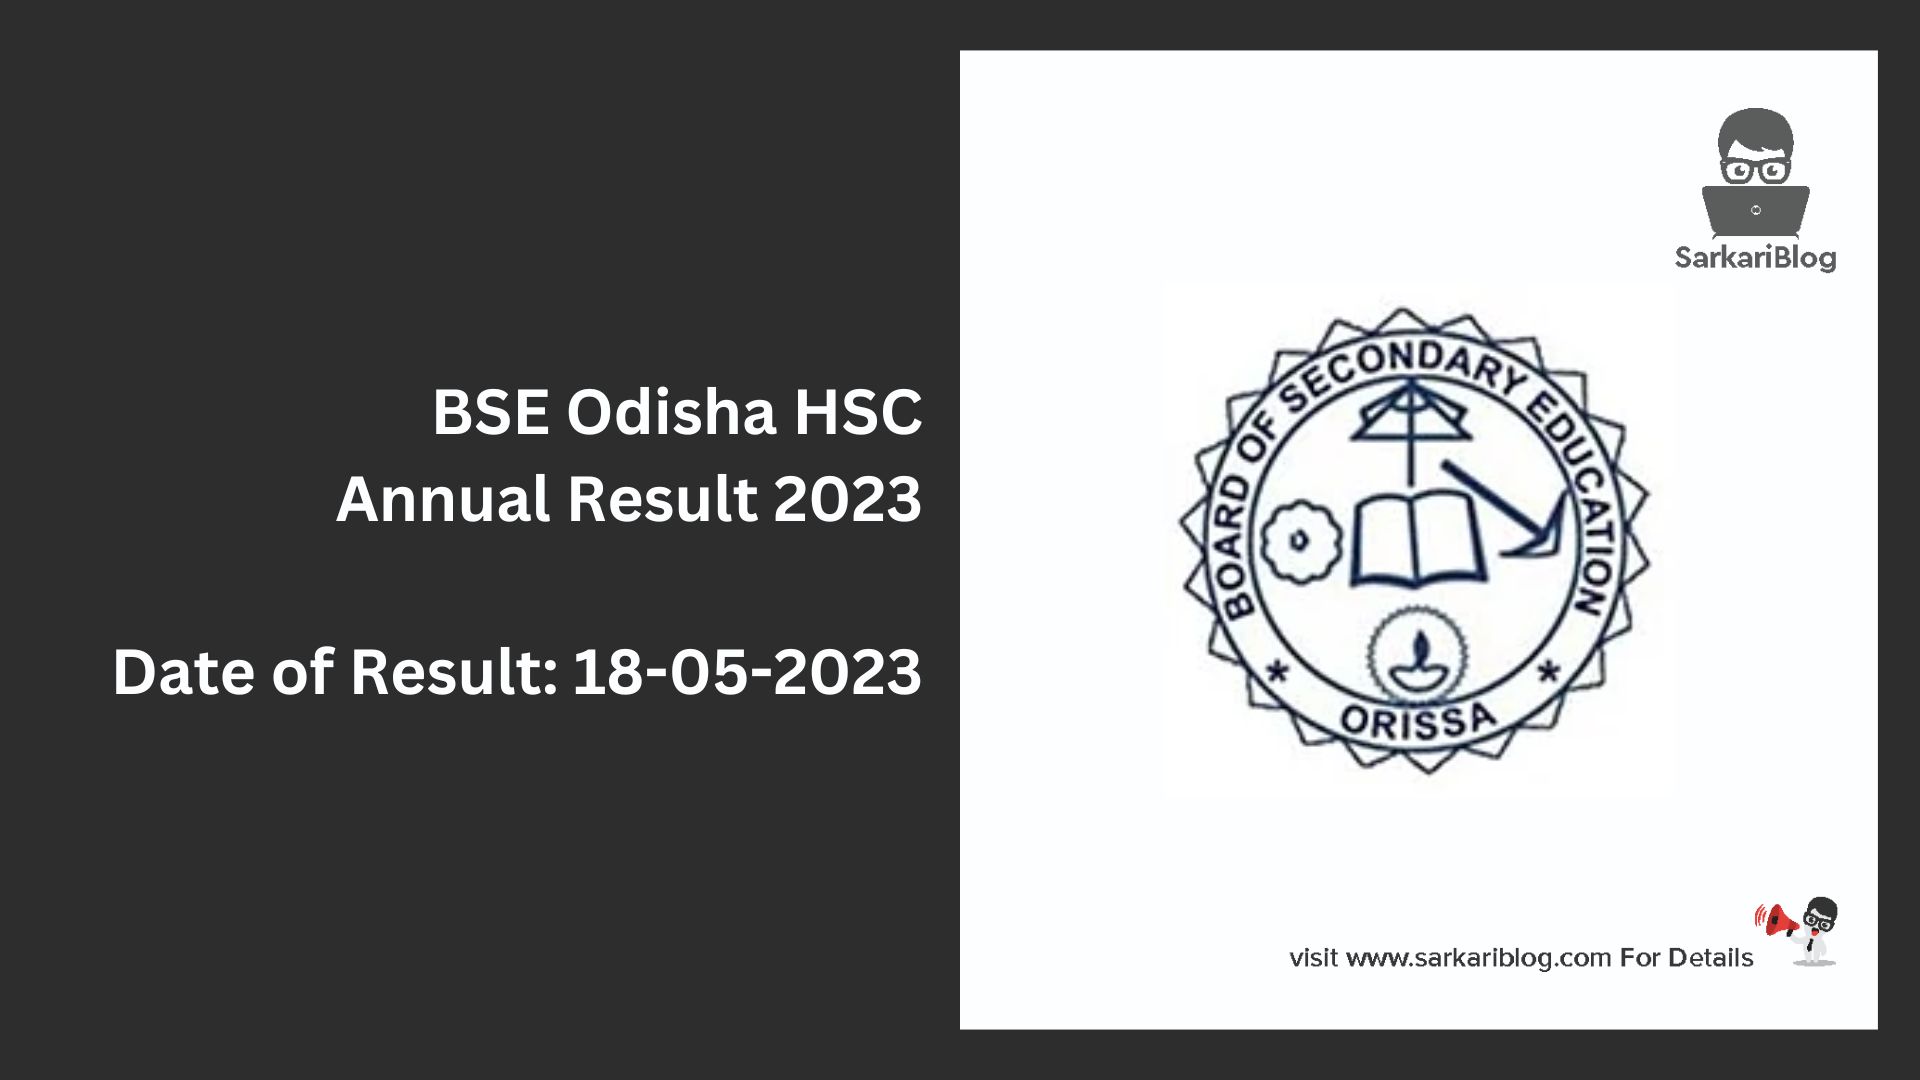 BSE Odisha HSC Annual Result 2023